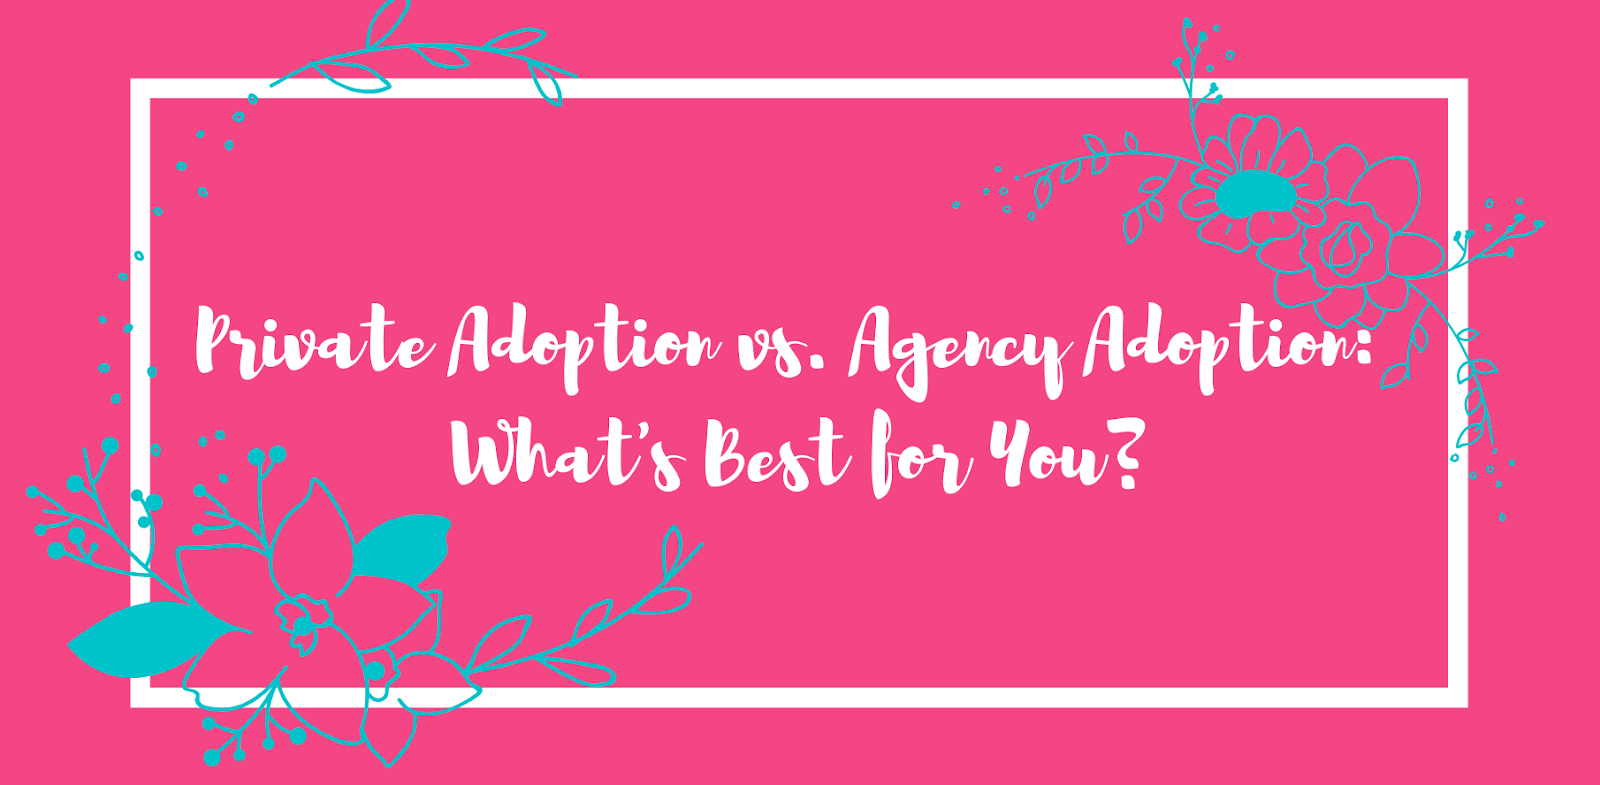 private adoption vs agency adoption